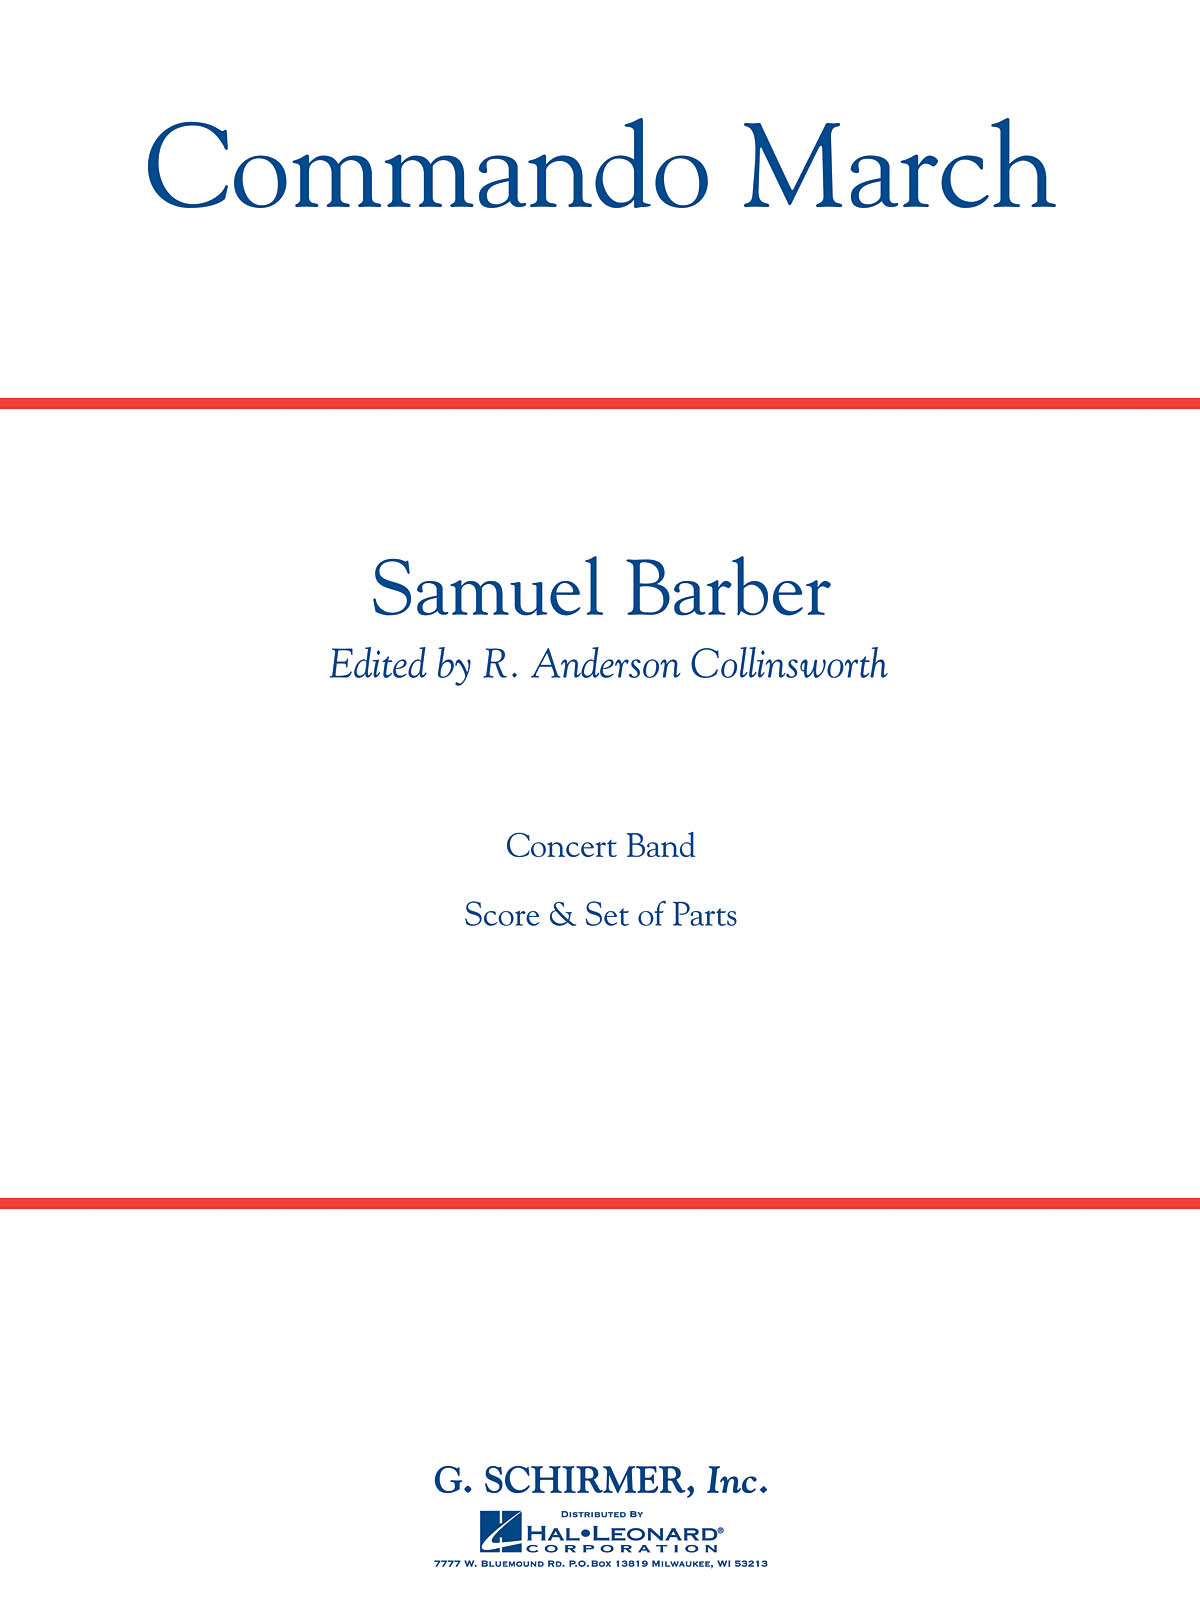 Samuel Barber: Commando March Sc/Pts (Critical Edition With Full Score)